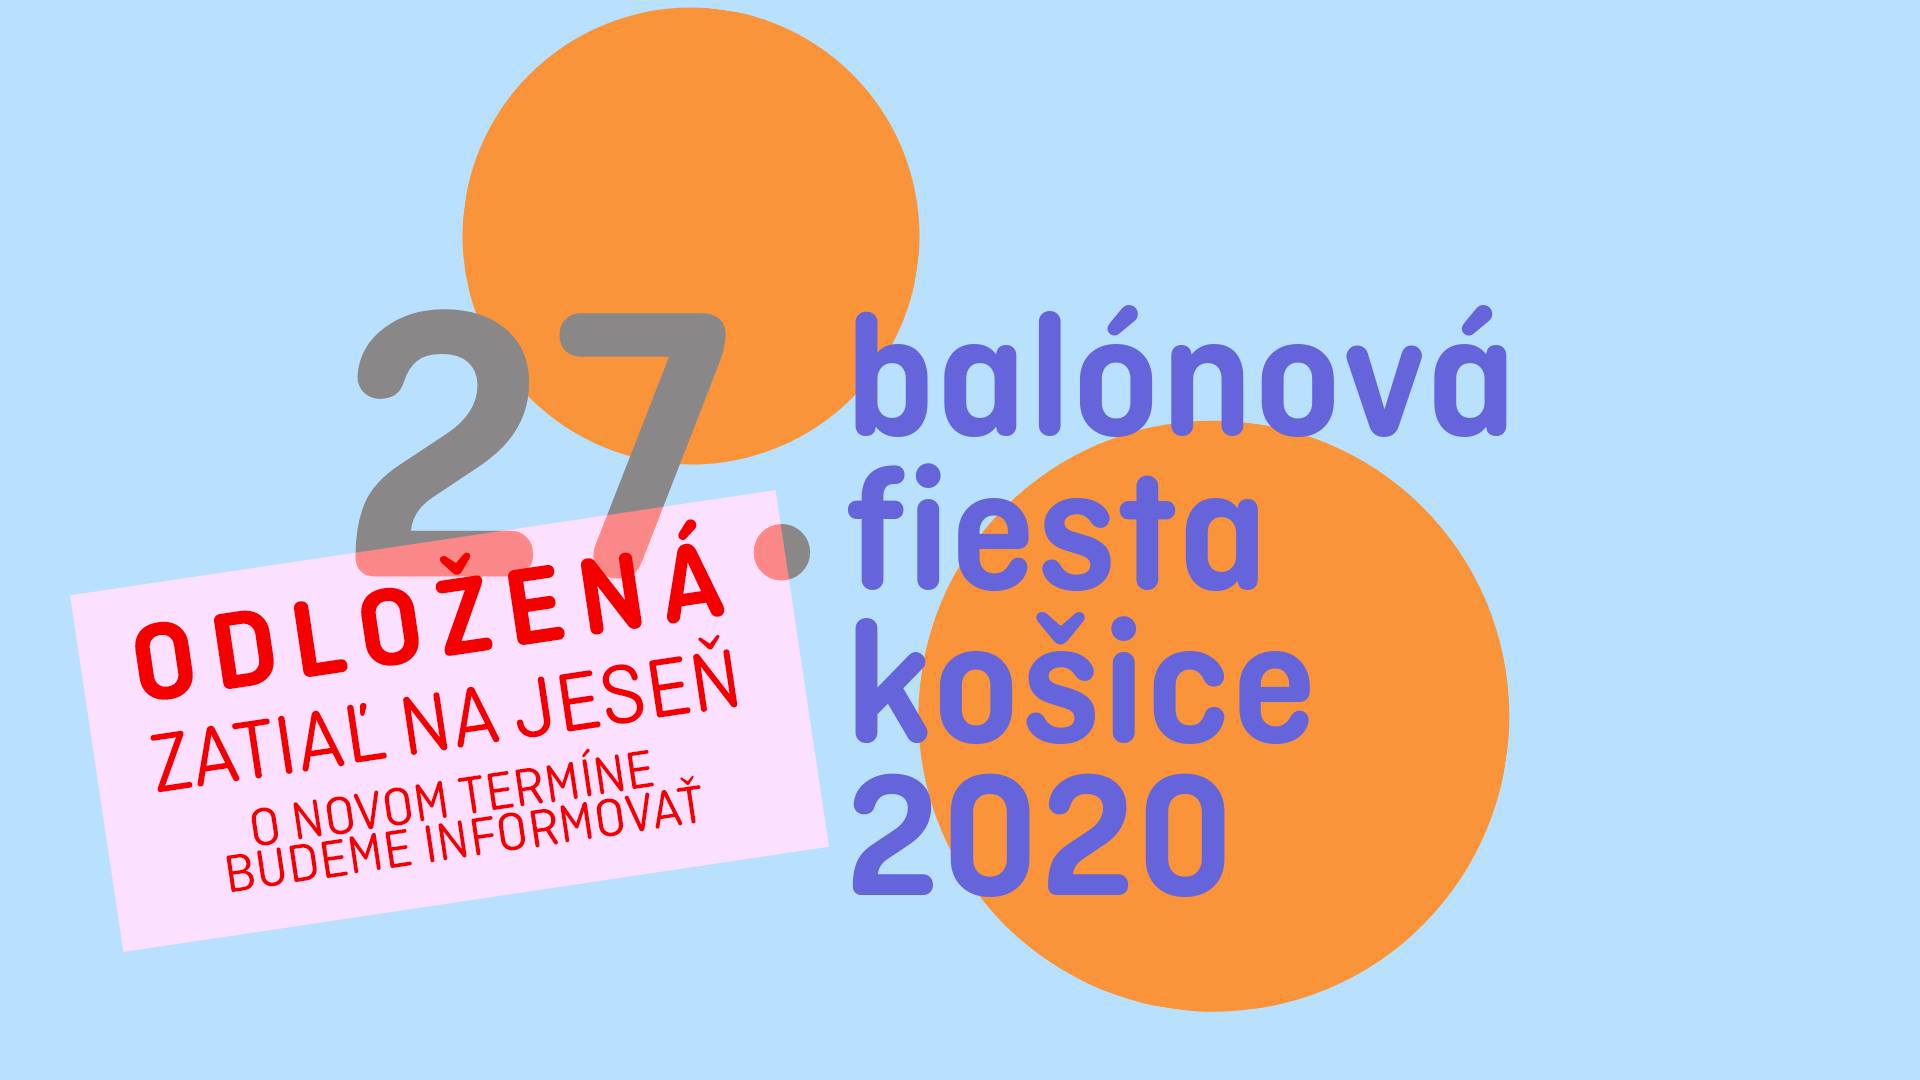 27. balnov fiesta koice 2020 - - - POSUNUT